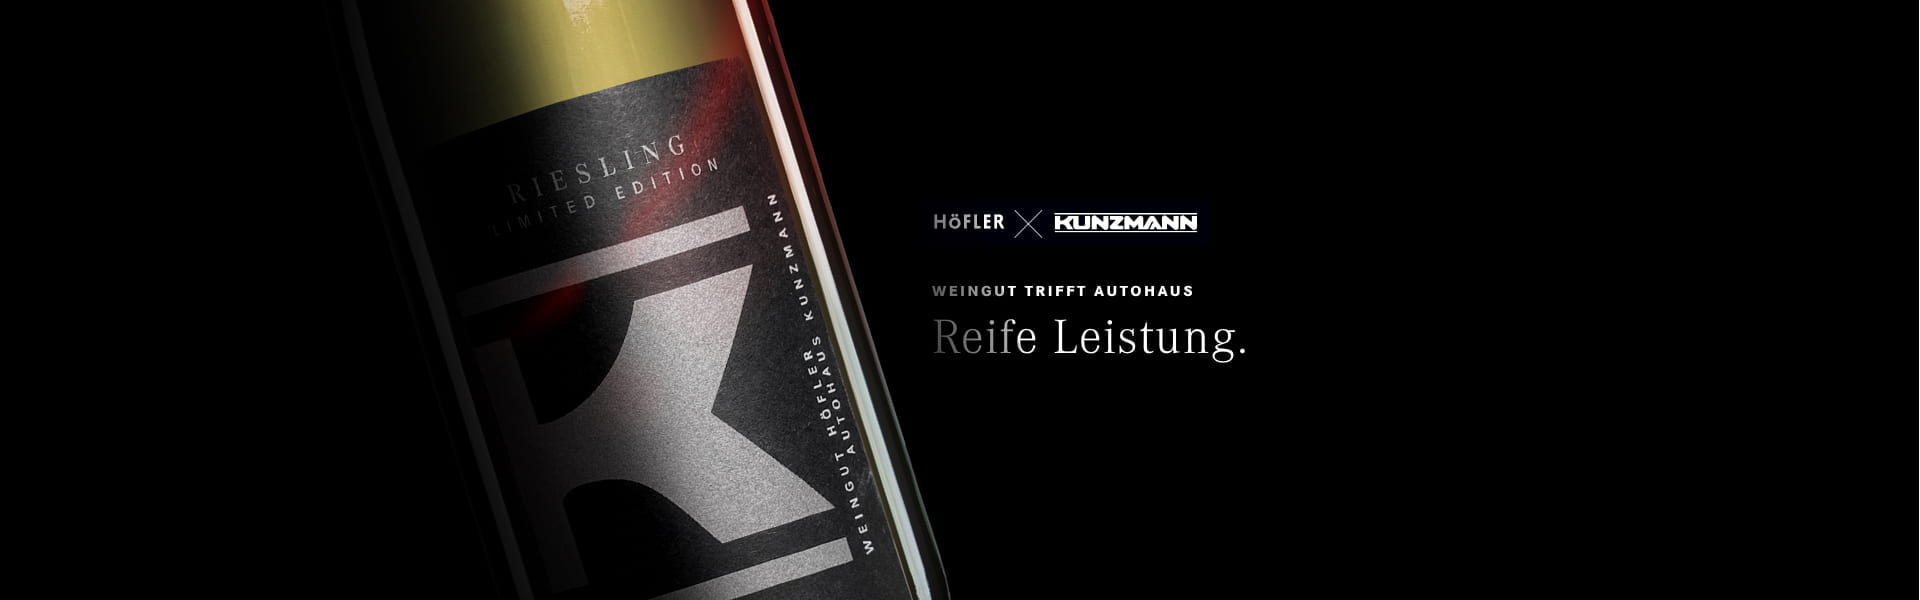 Riesling Limited Edition - Höfler x Kunzmann